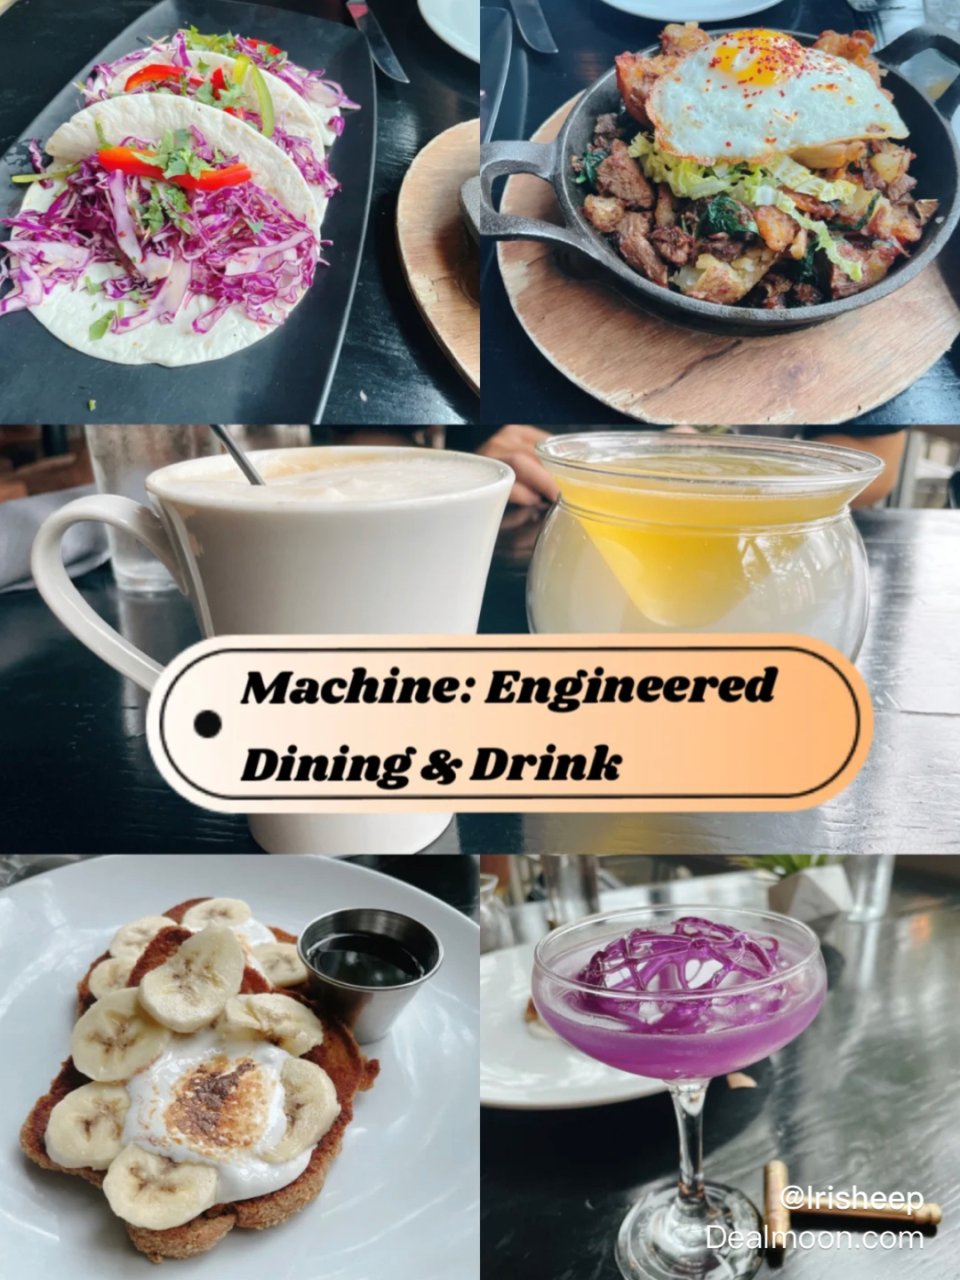 Machine: Engineered Dining & Drink